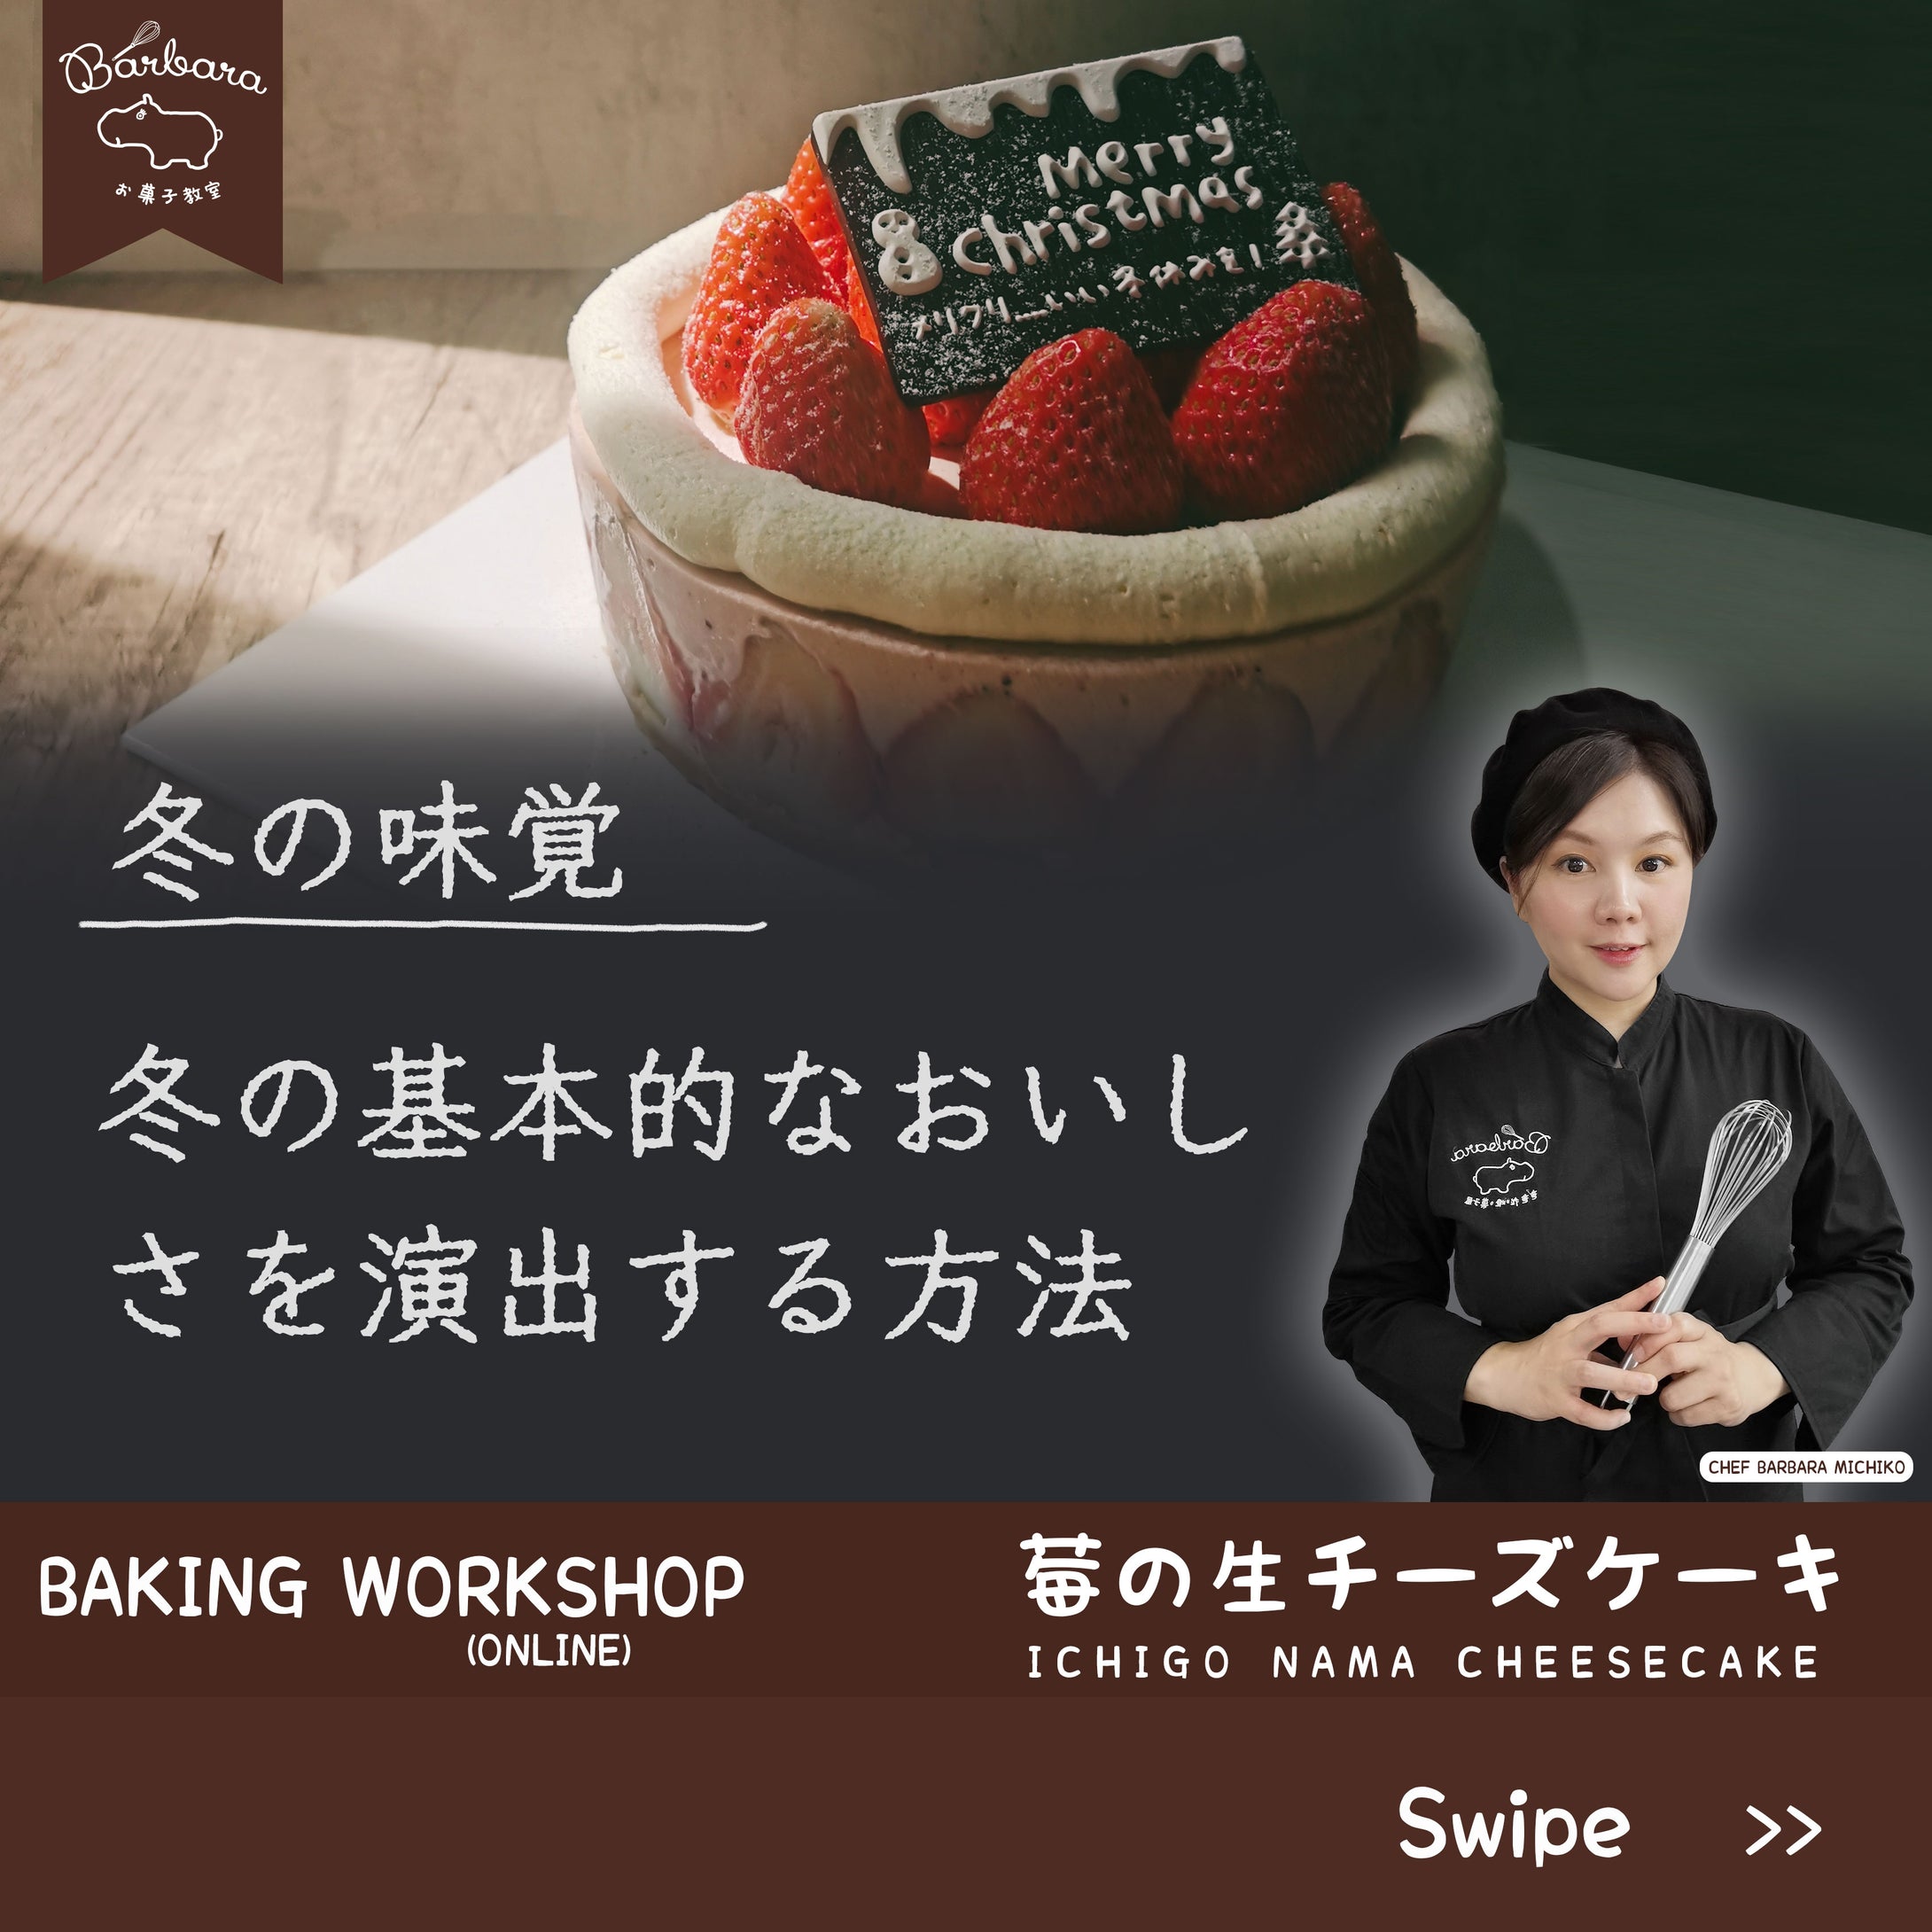 🎀 Ichigo Nama Cheesecake Workshop🎀
莓の生チーズケーキ